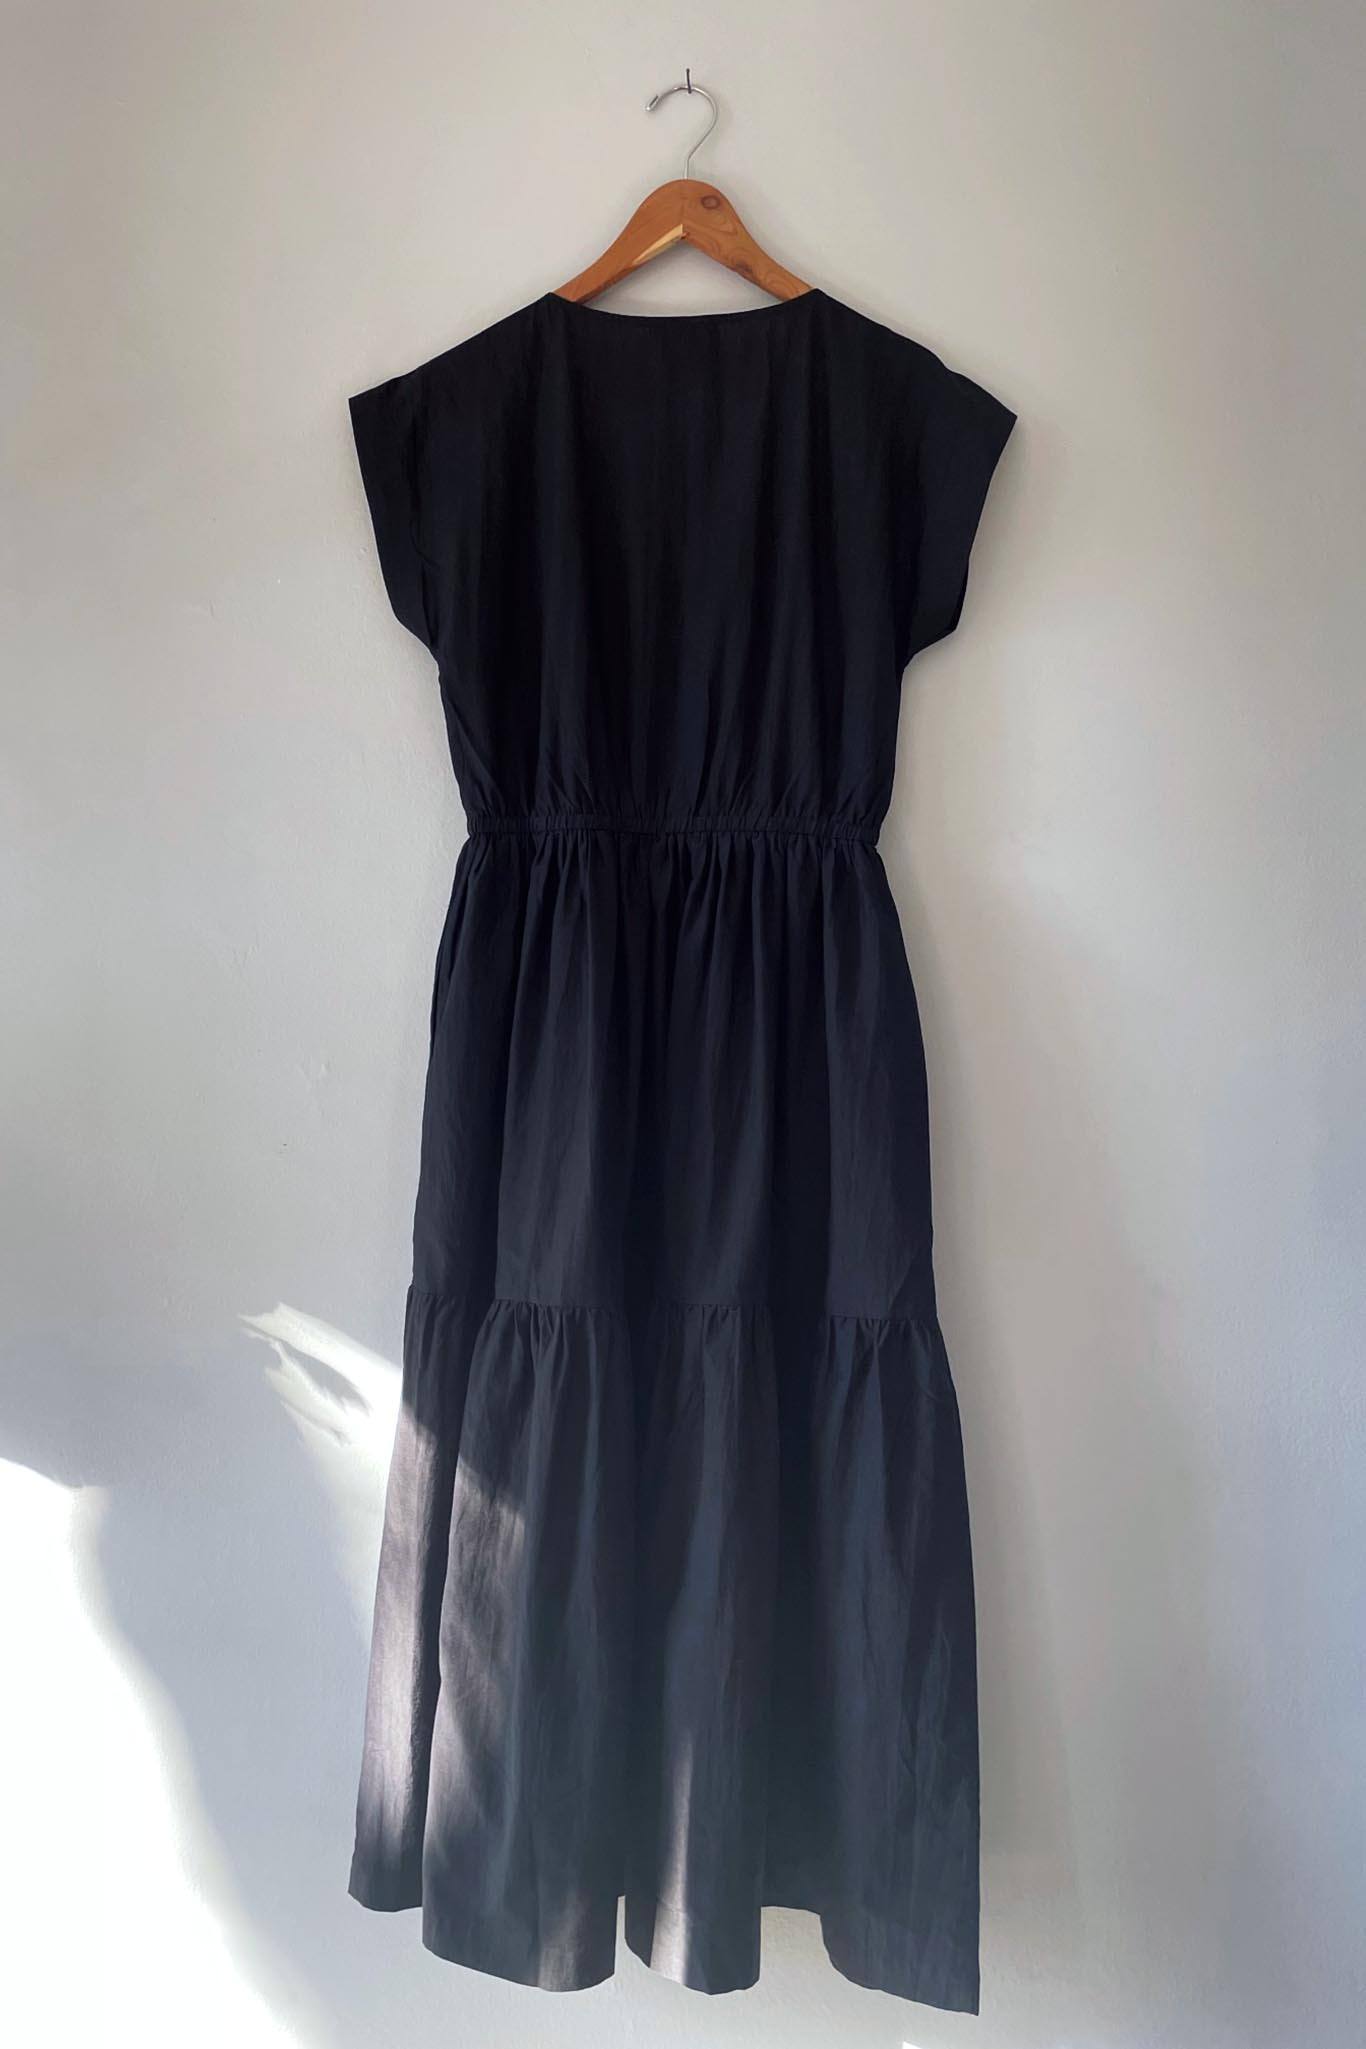 M.PATMOS Penelope Dress - Black | The Perfect Occasion Dress